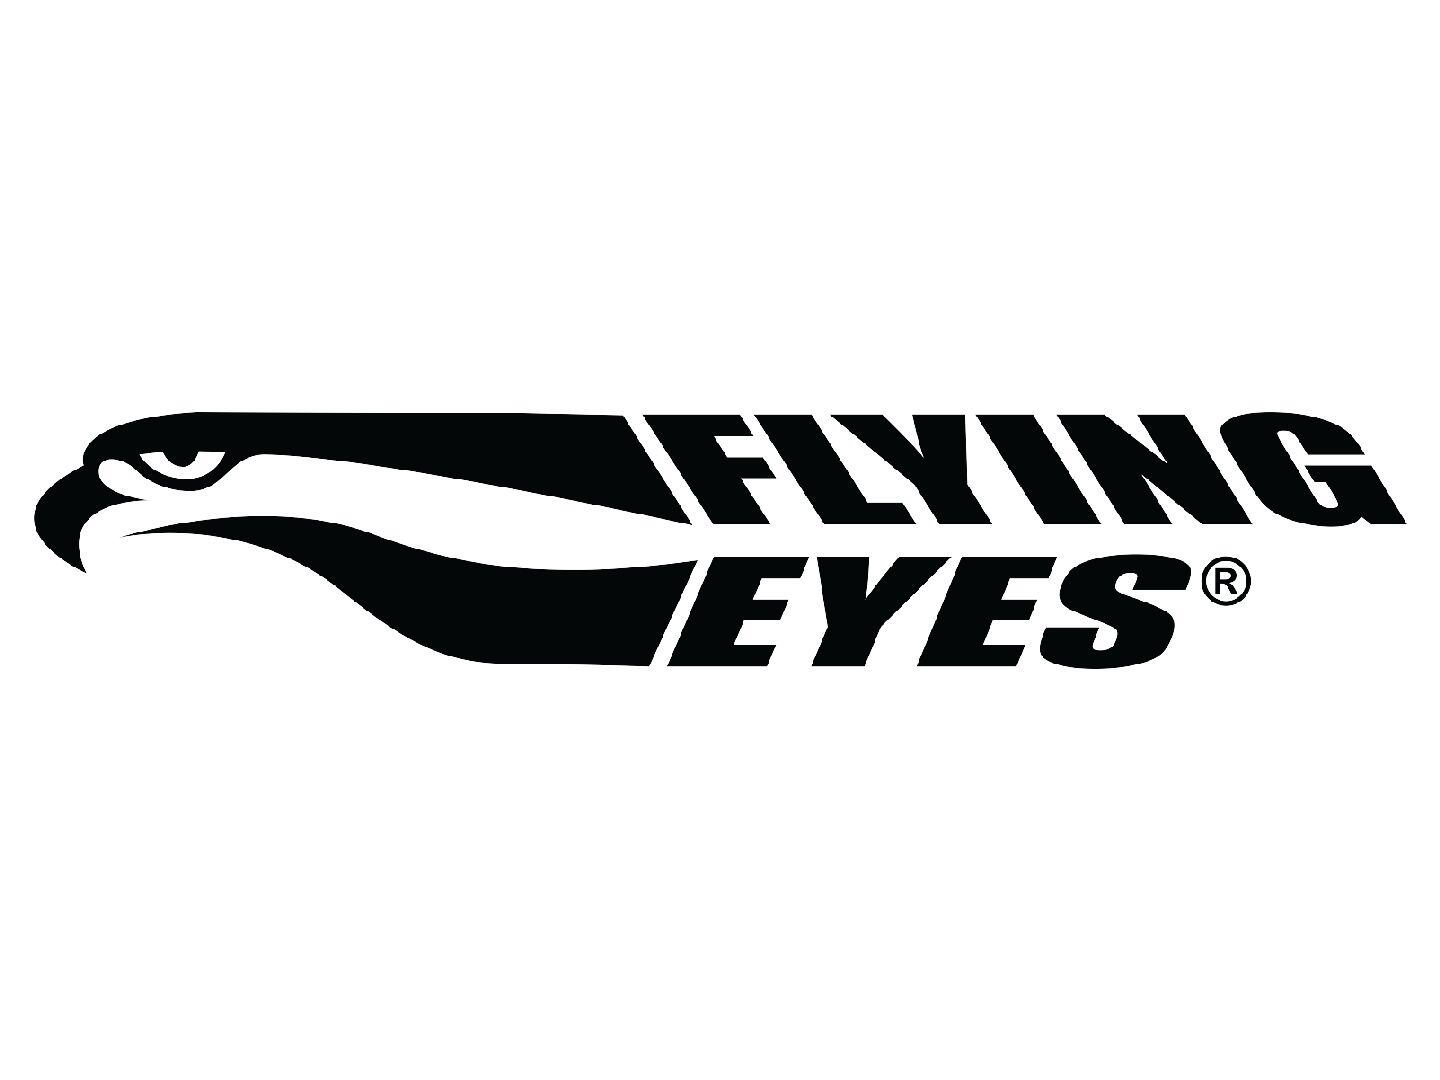 Flying Eyes Optics Expands into New Markets with Innovative Eyewear